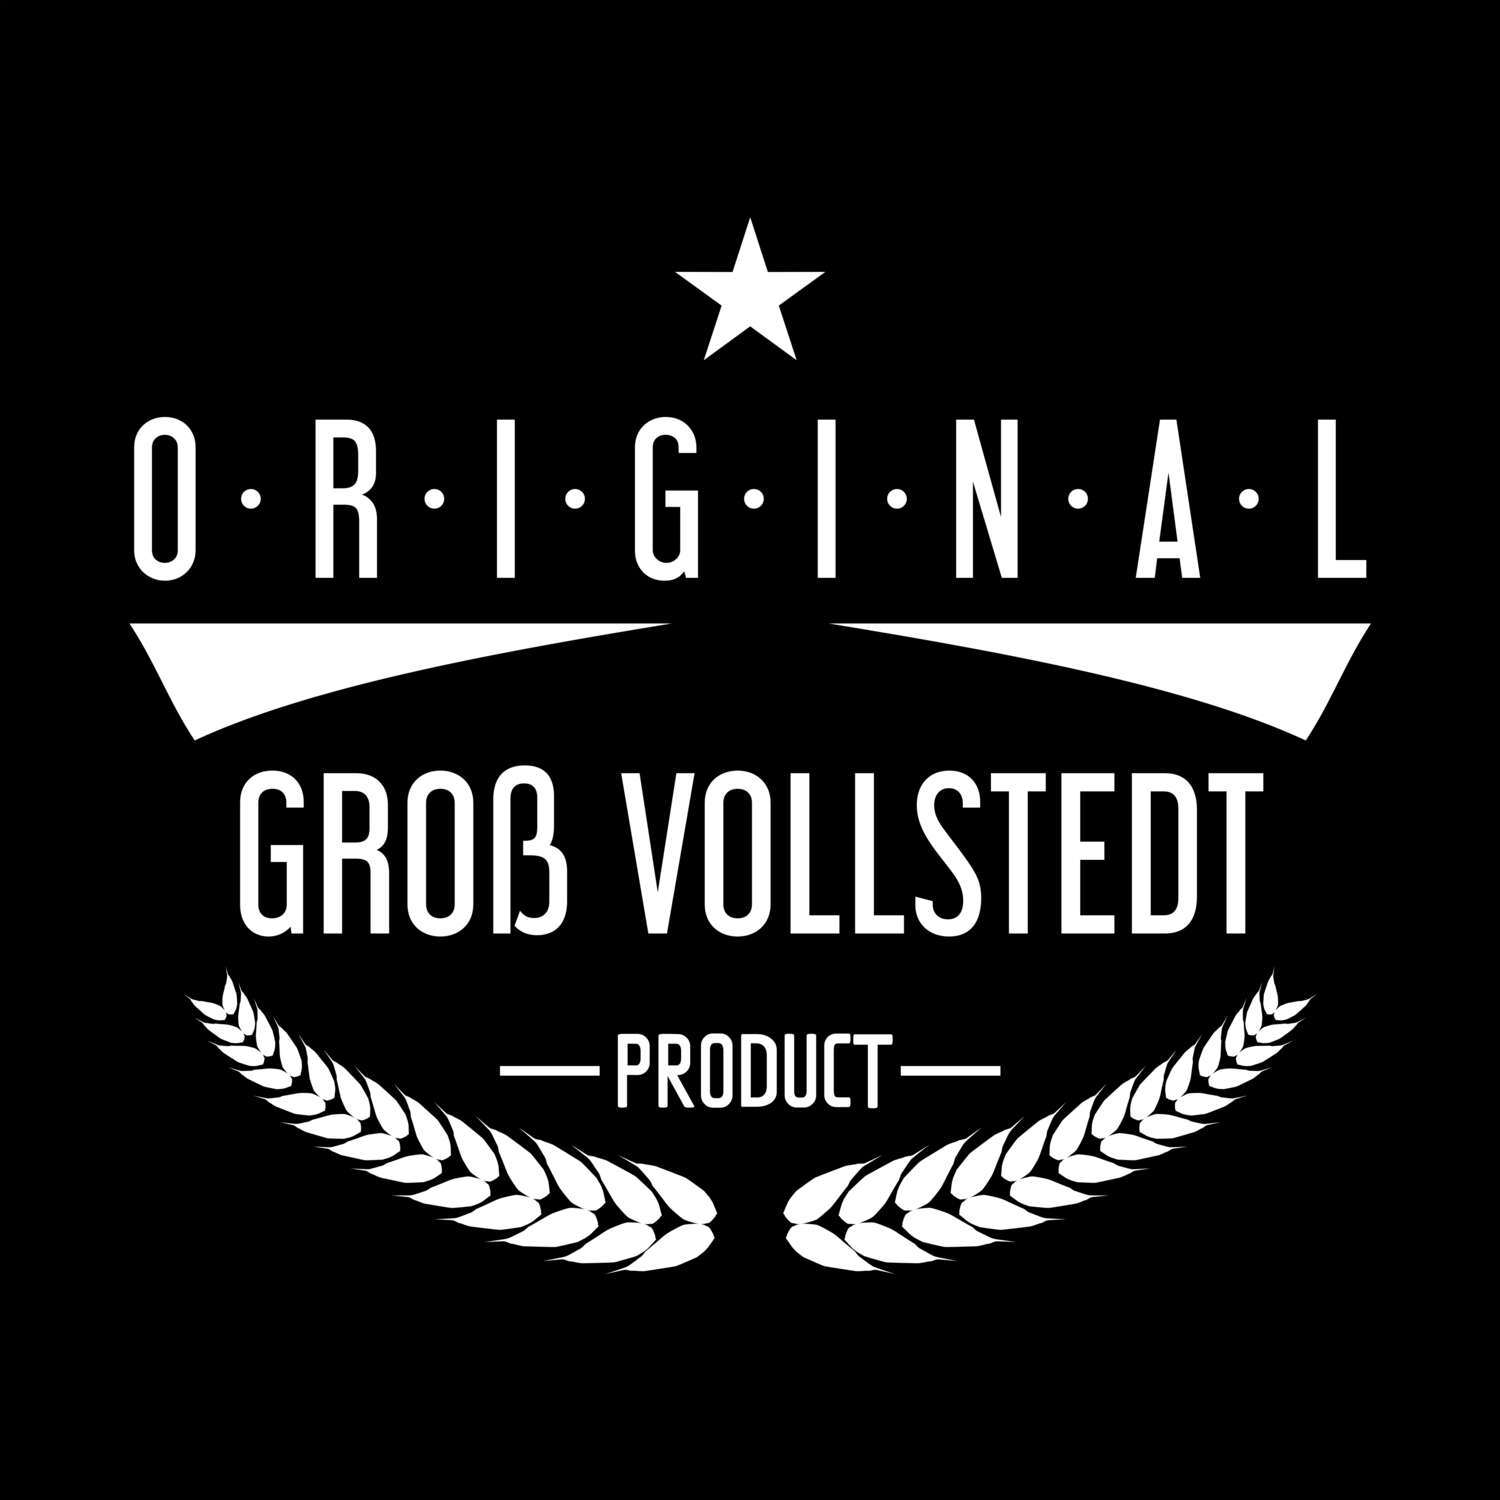 Groß Vollstedt T-Shirt »Original Product«